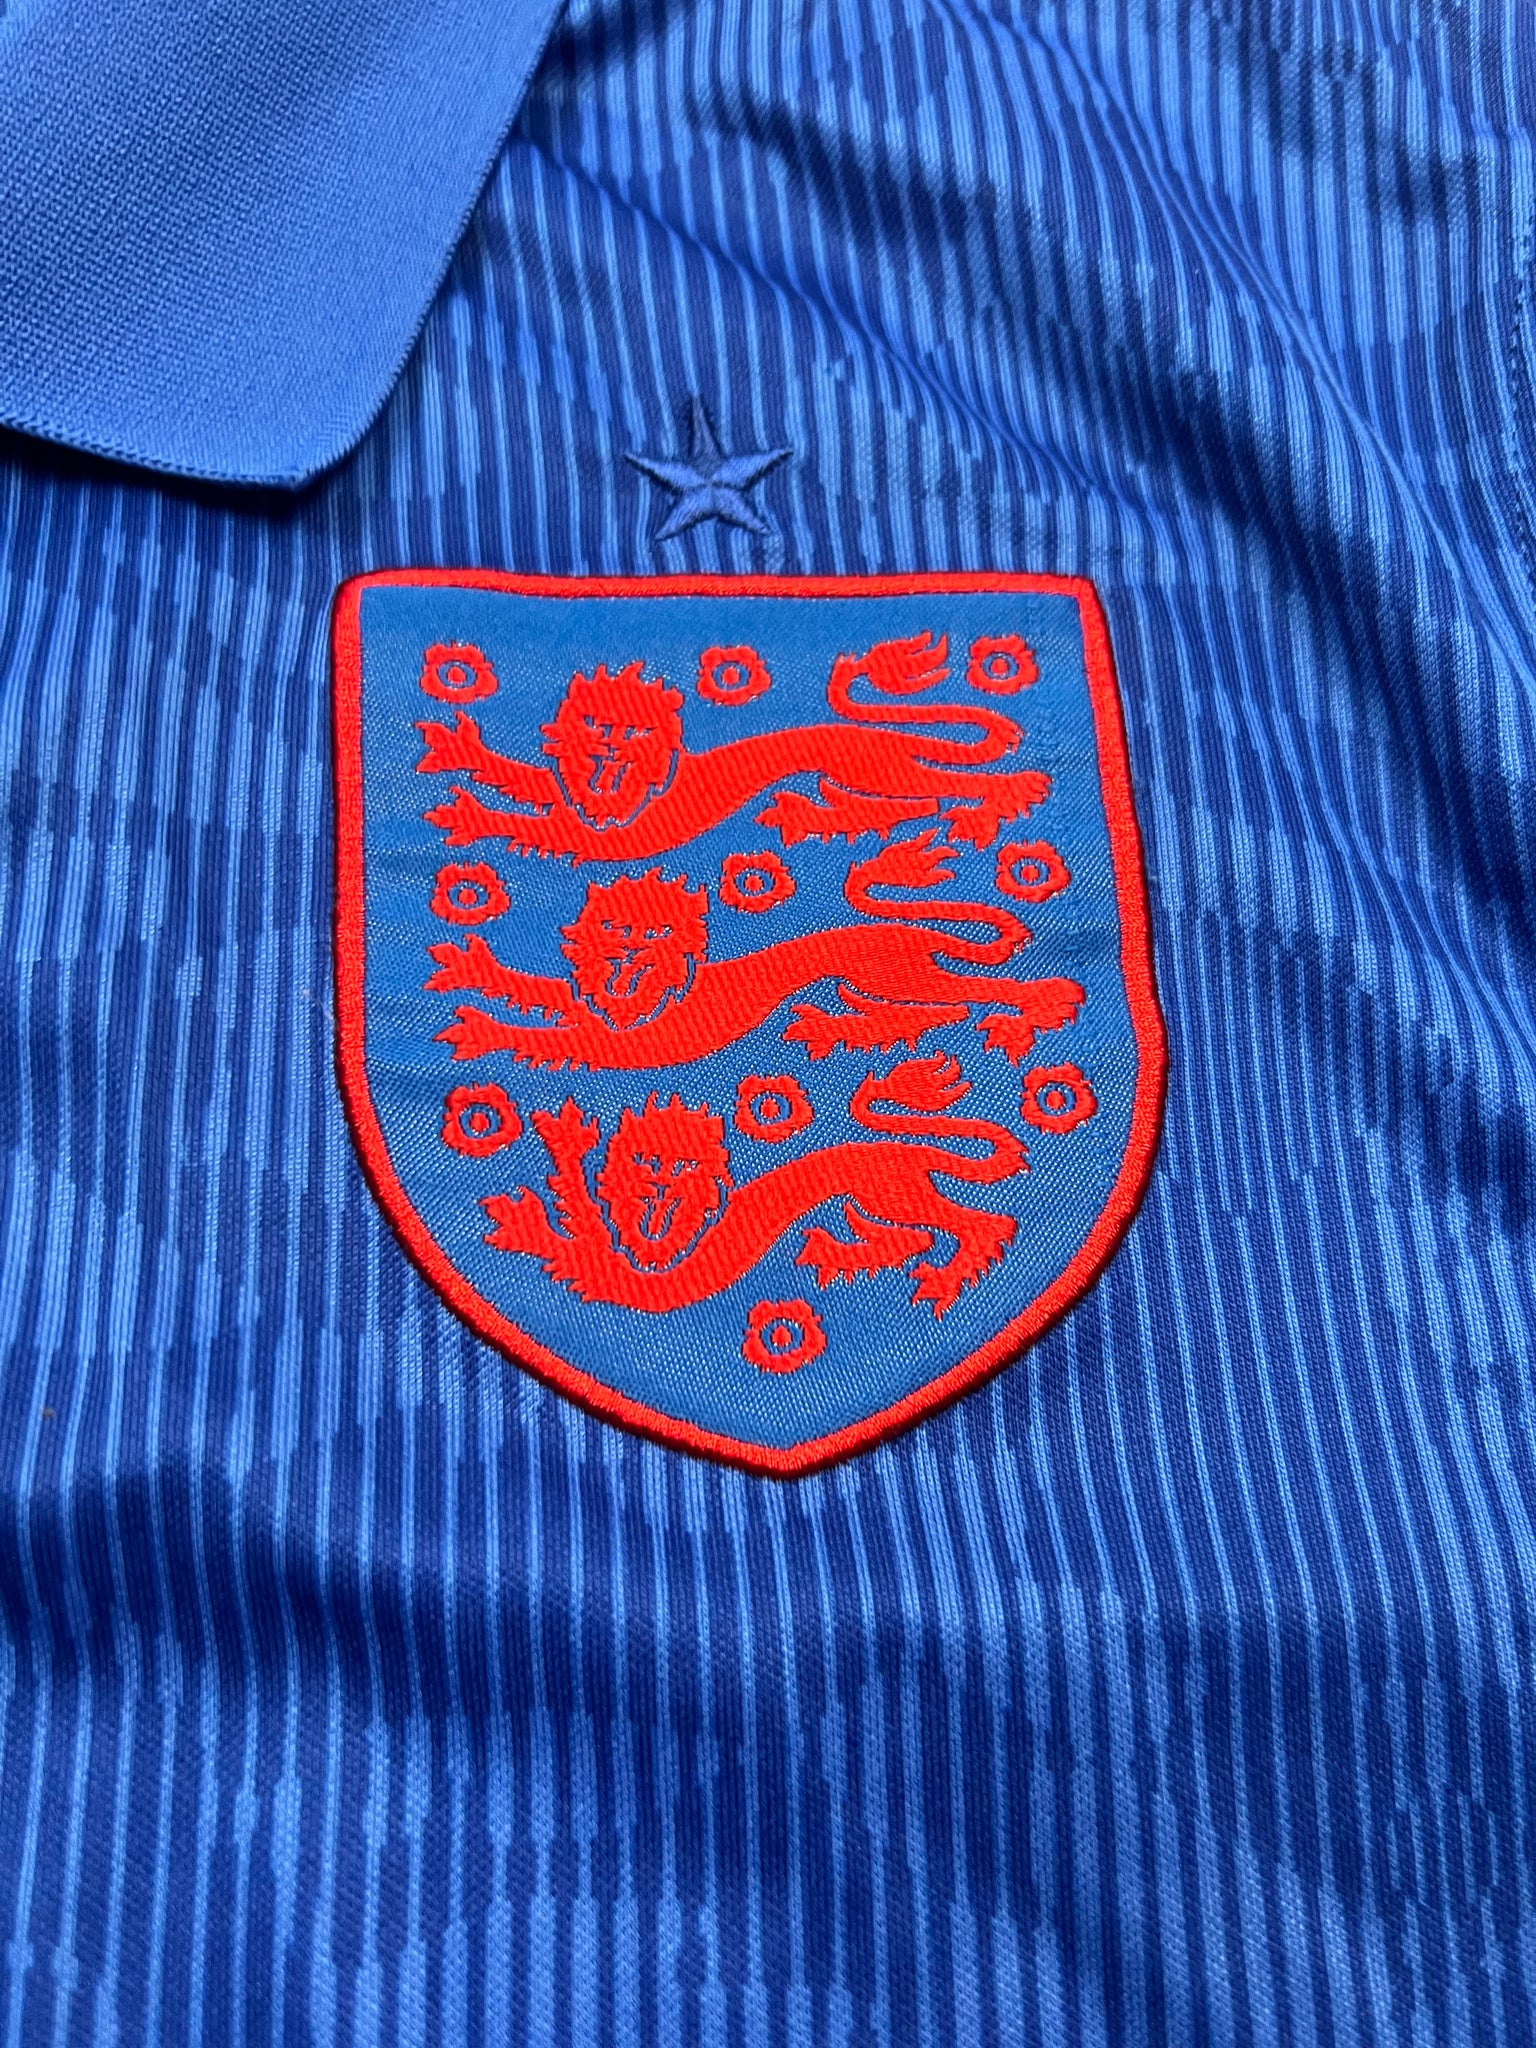 Nike England Jersey (M)